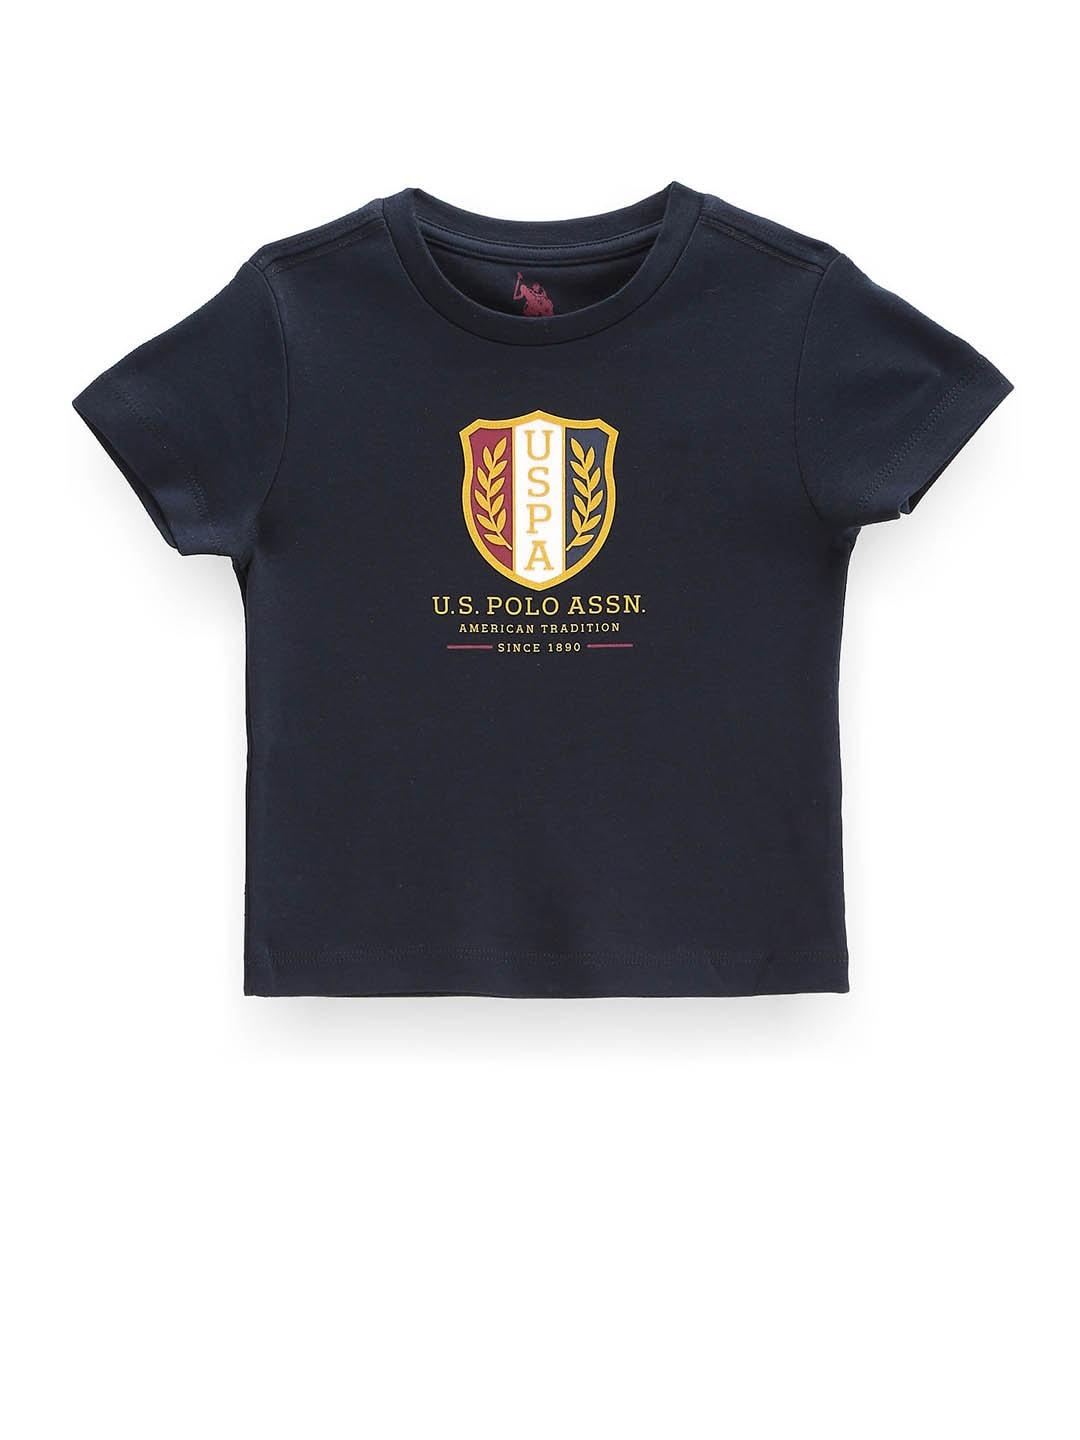 u.s. polo assn. kids boys graphic printed regular fit cotton t-shirt